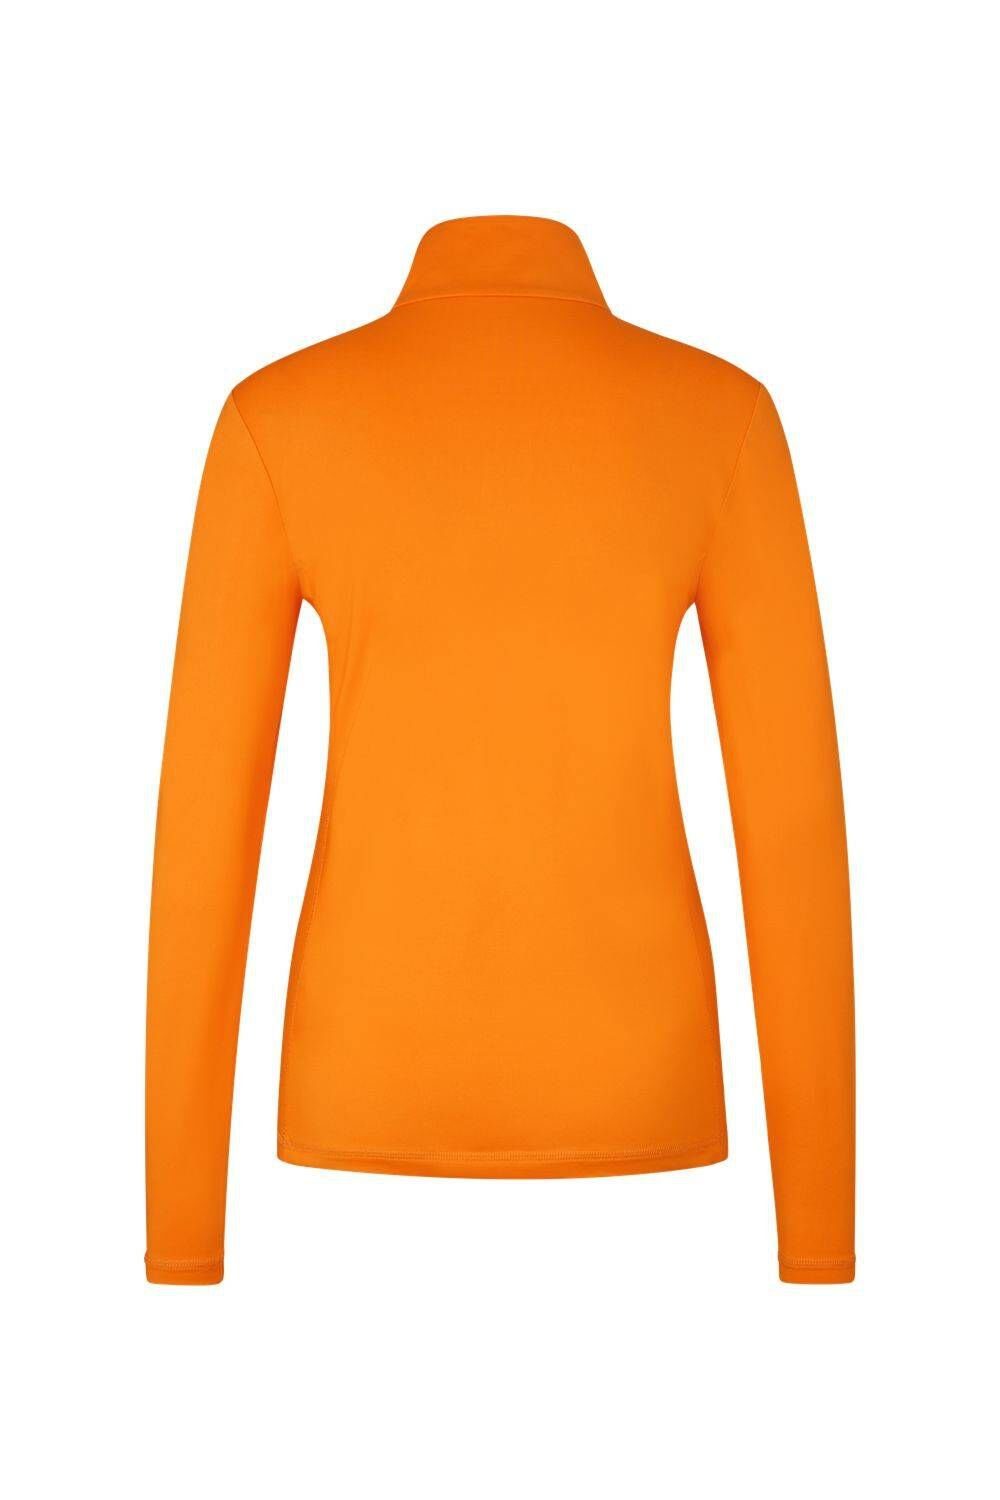 + Sweatshirt orange mandarine Ice MARGO (506) 2 Damen Fire Bogner Trainingsjacke